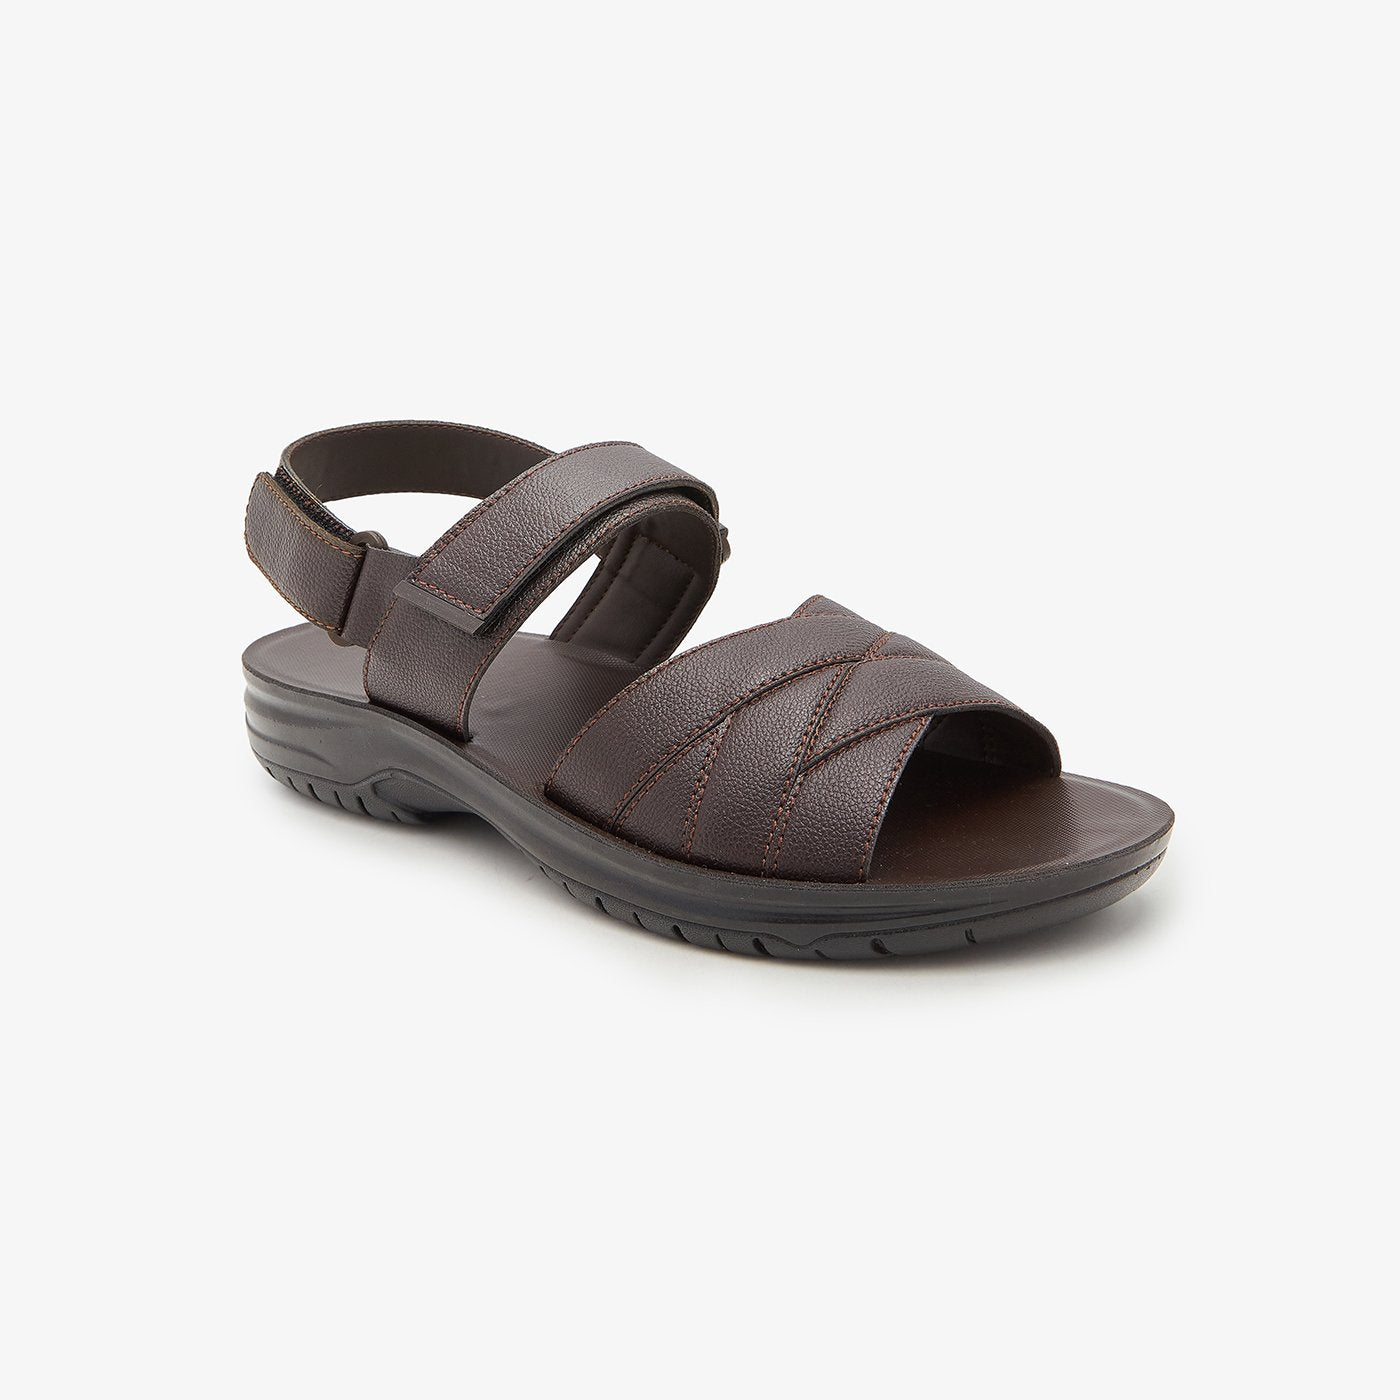 Buy BROWN Arcade sandals for Men – Ndure.com